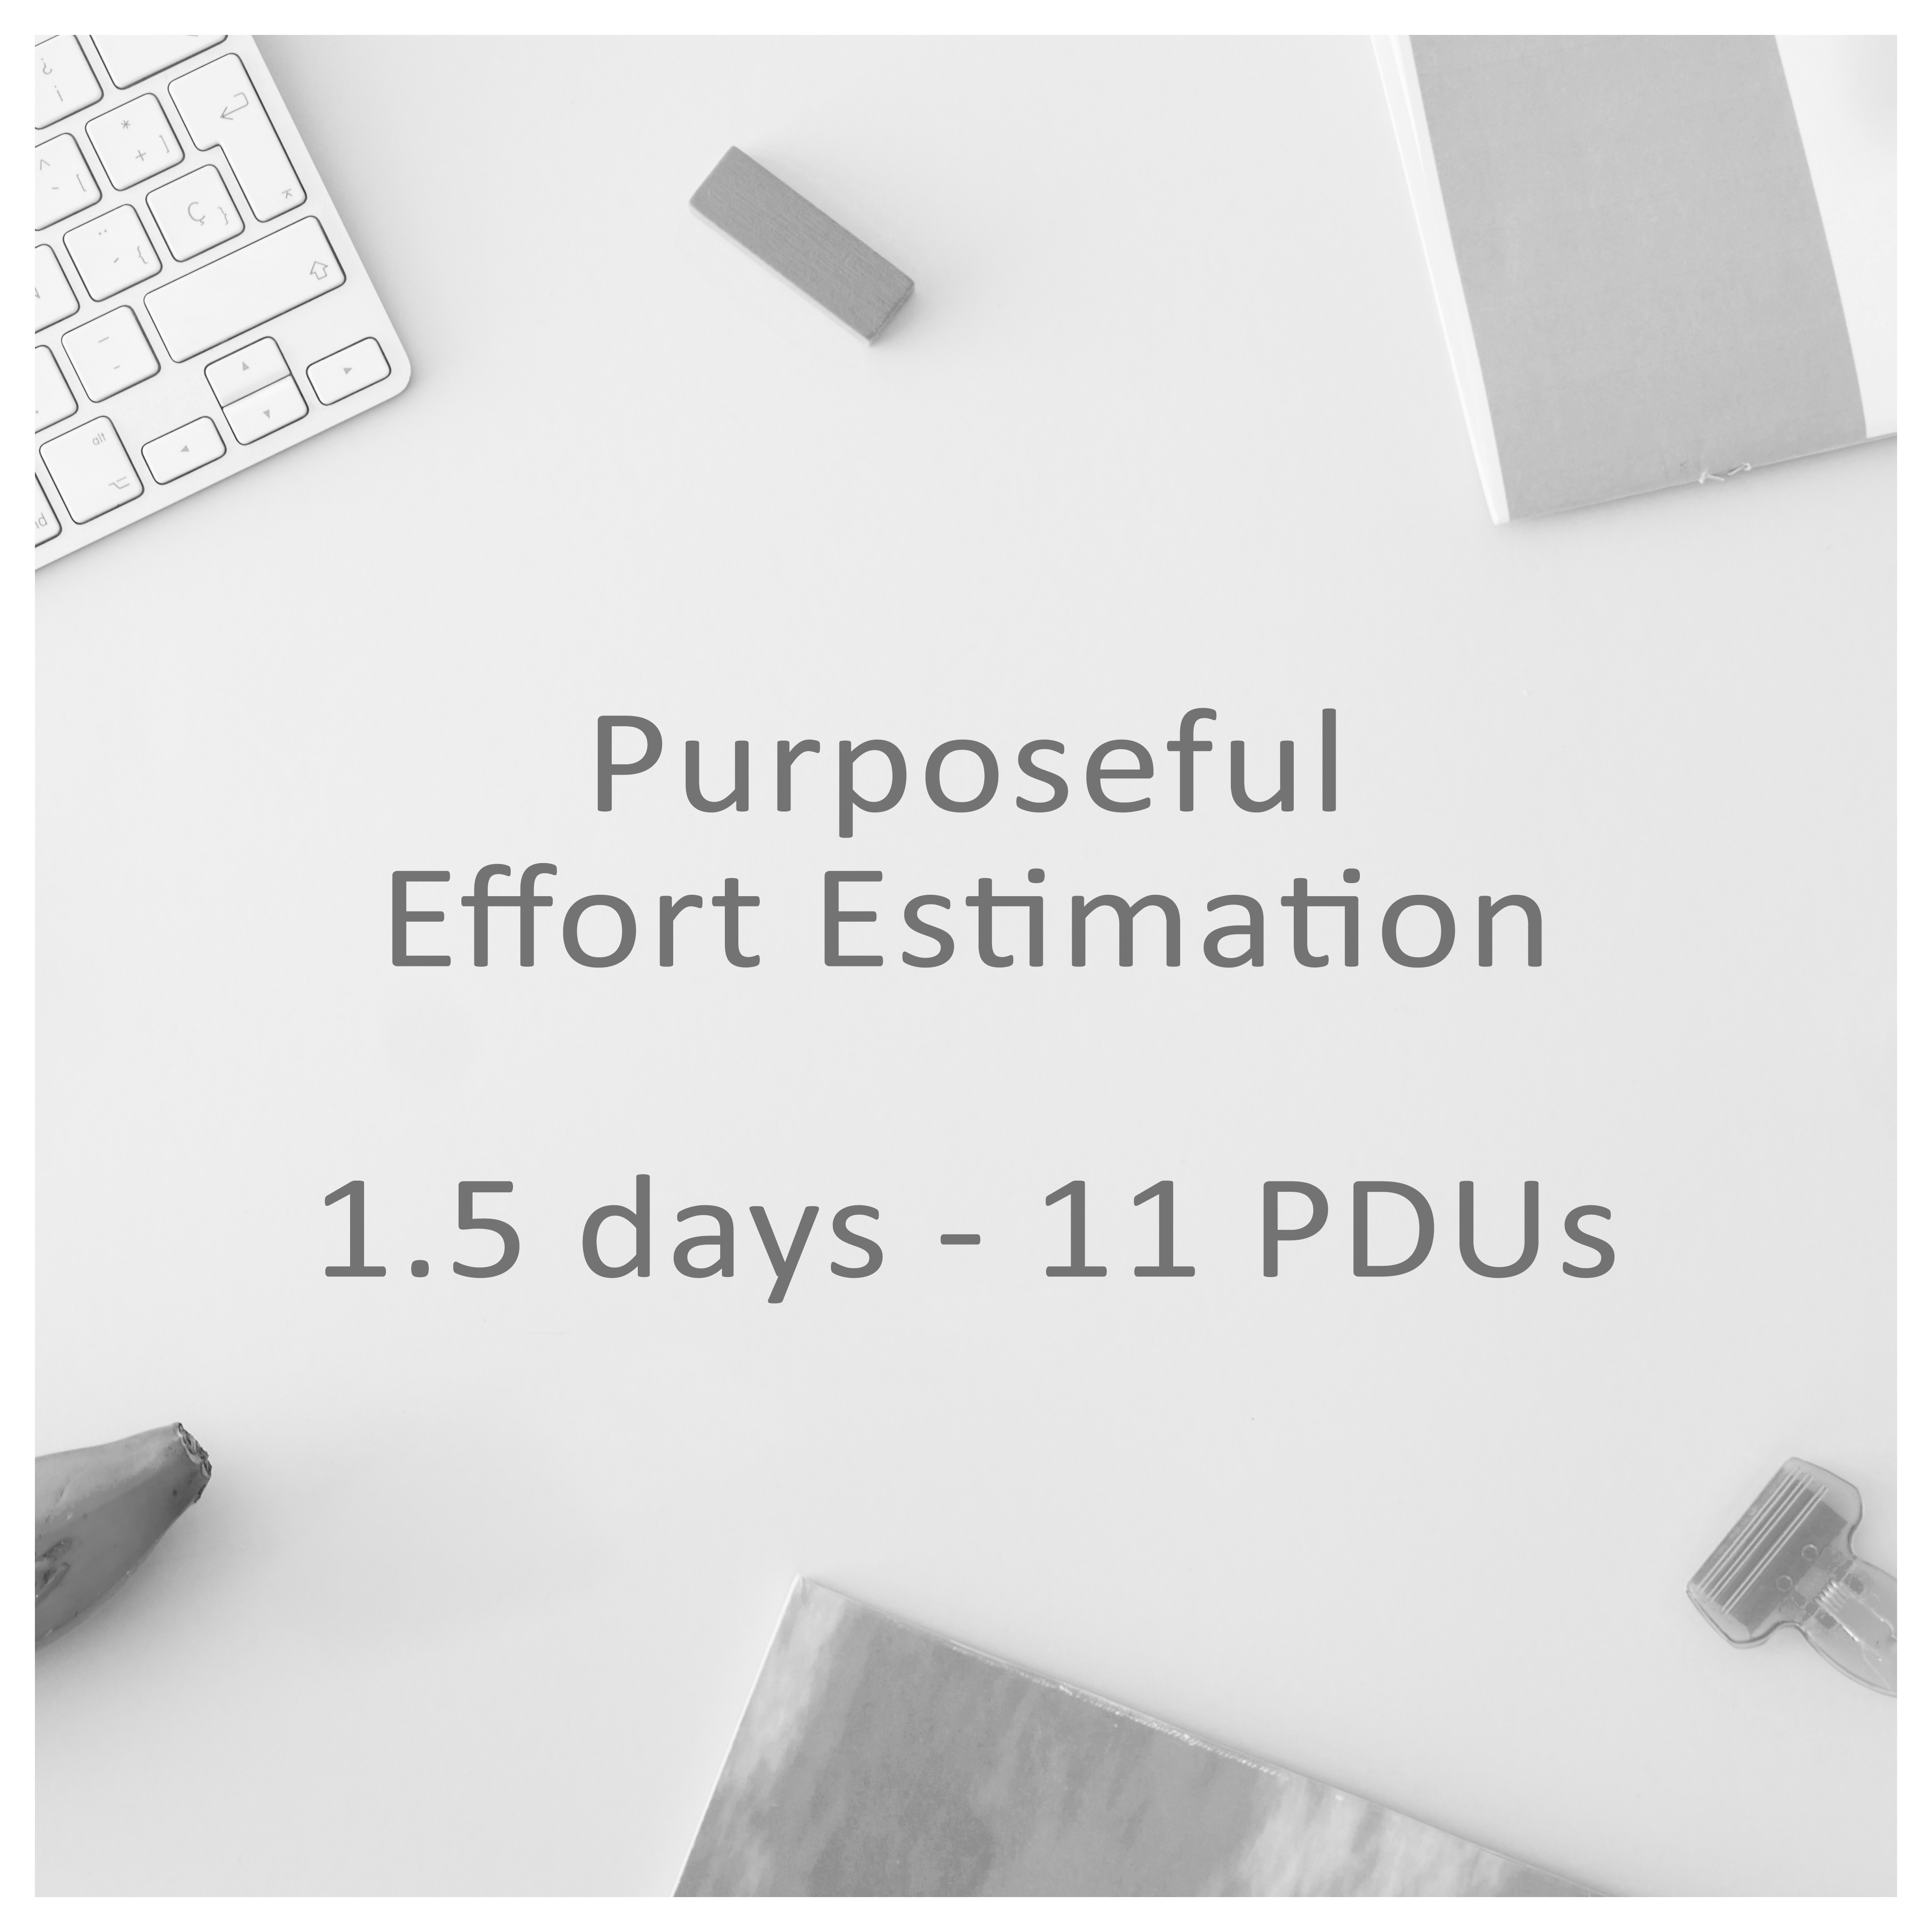 Purposeful Effort Estimation